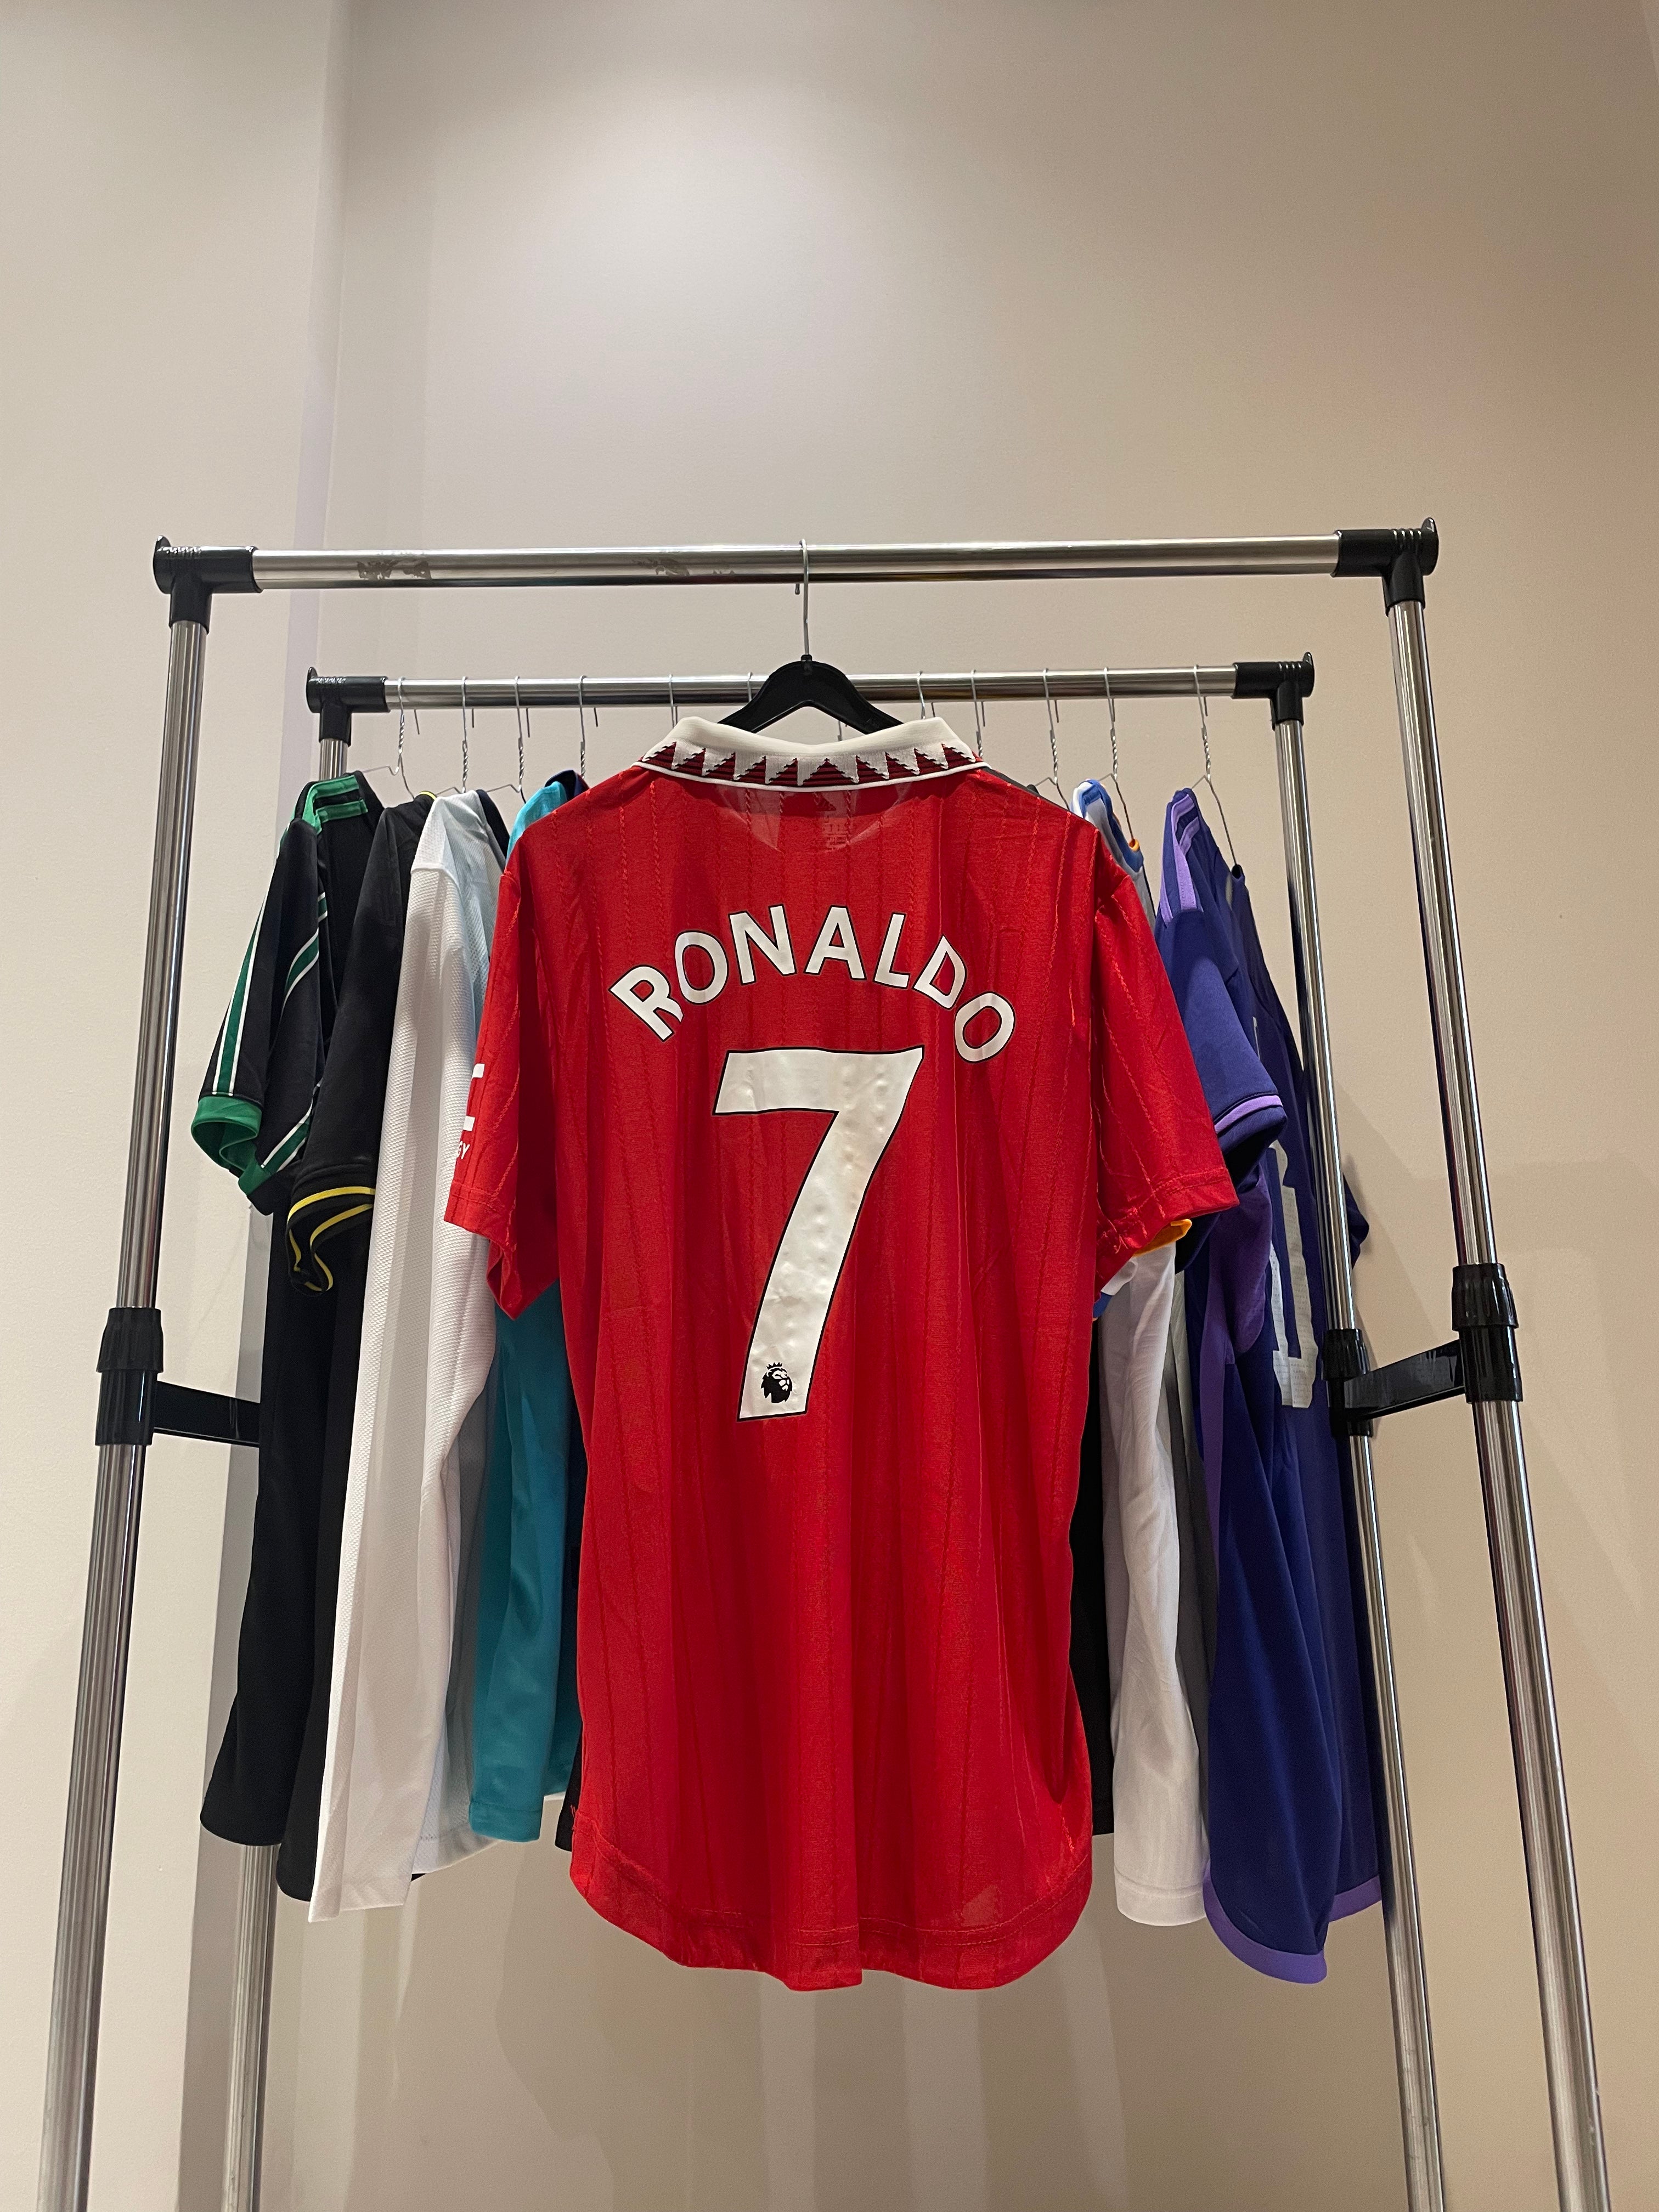 Ronaldo x Manchester United